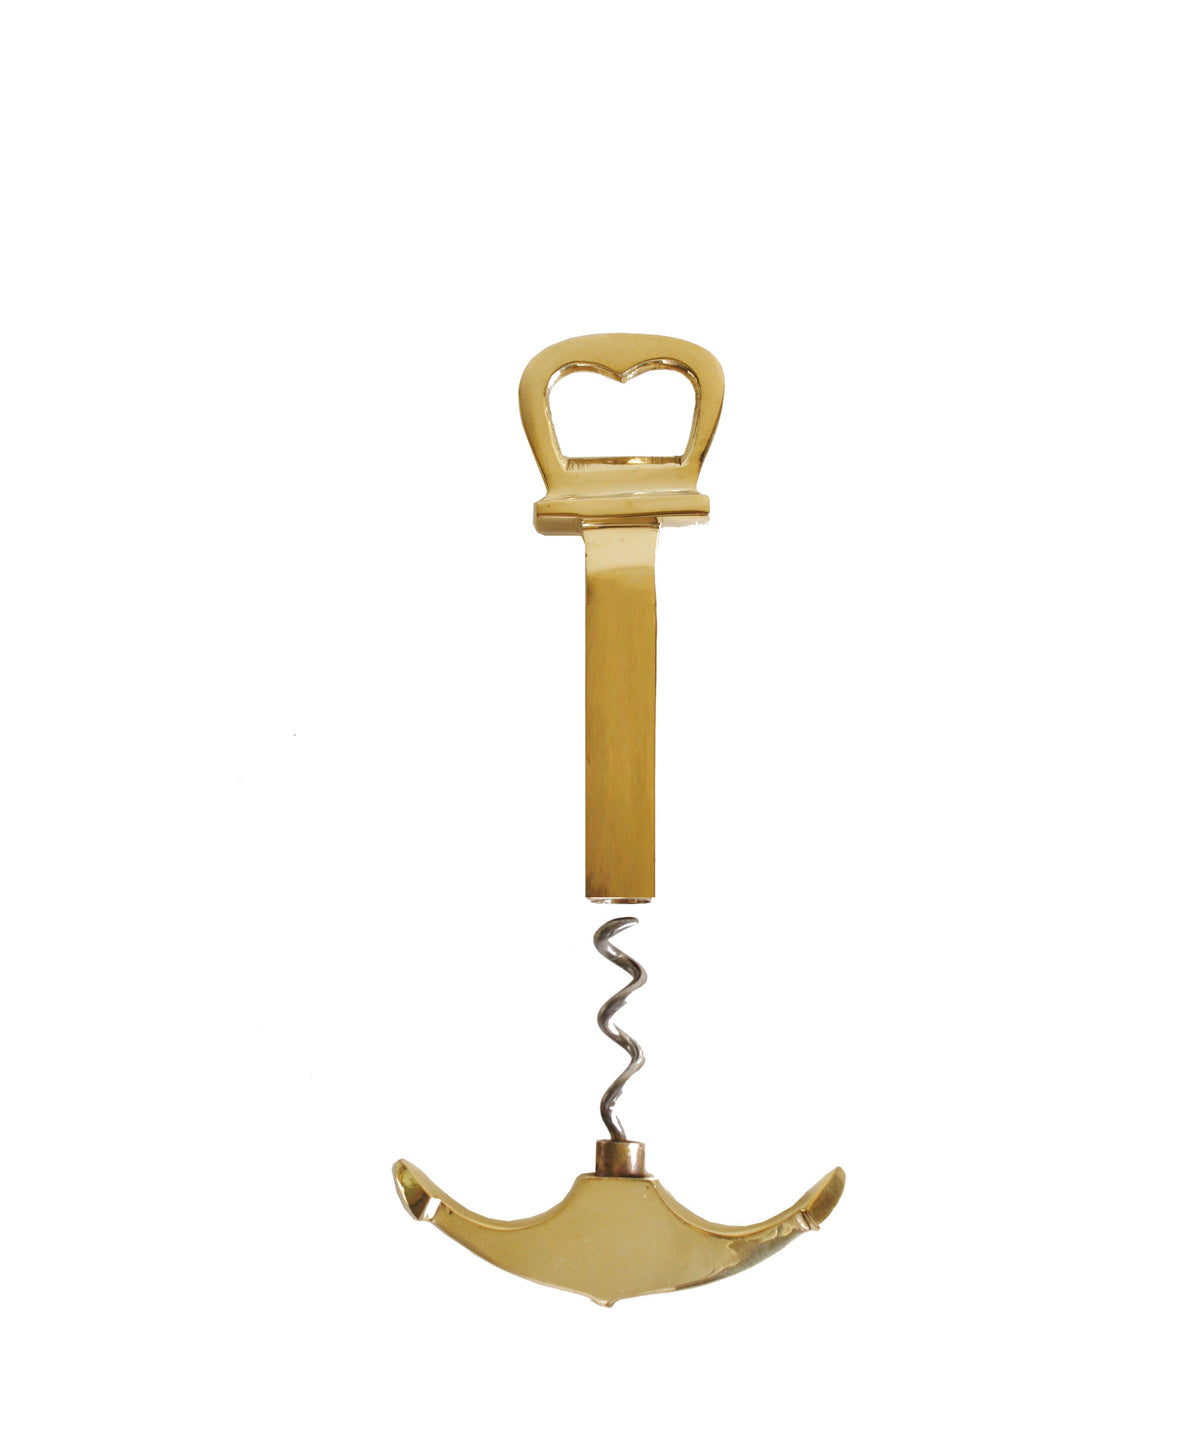 A vintage Solid Brass Corkscrew